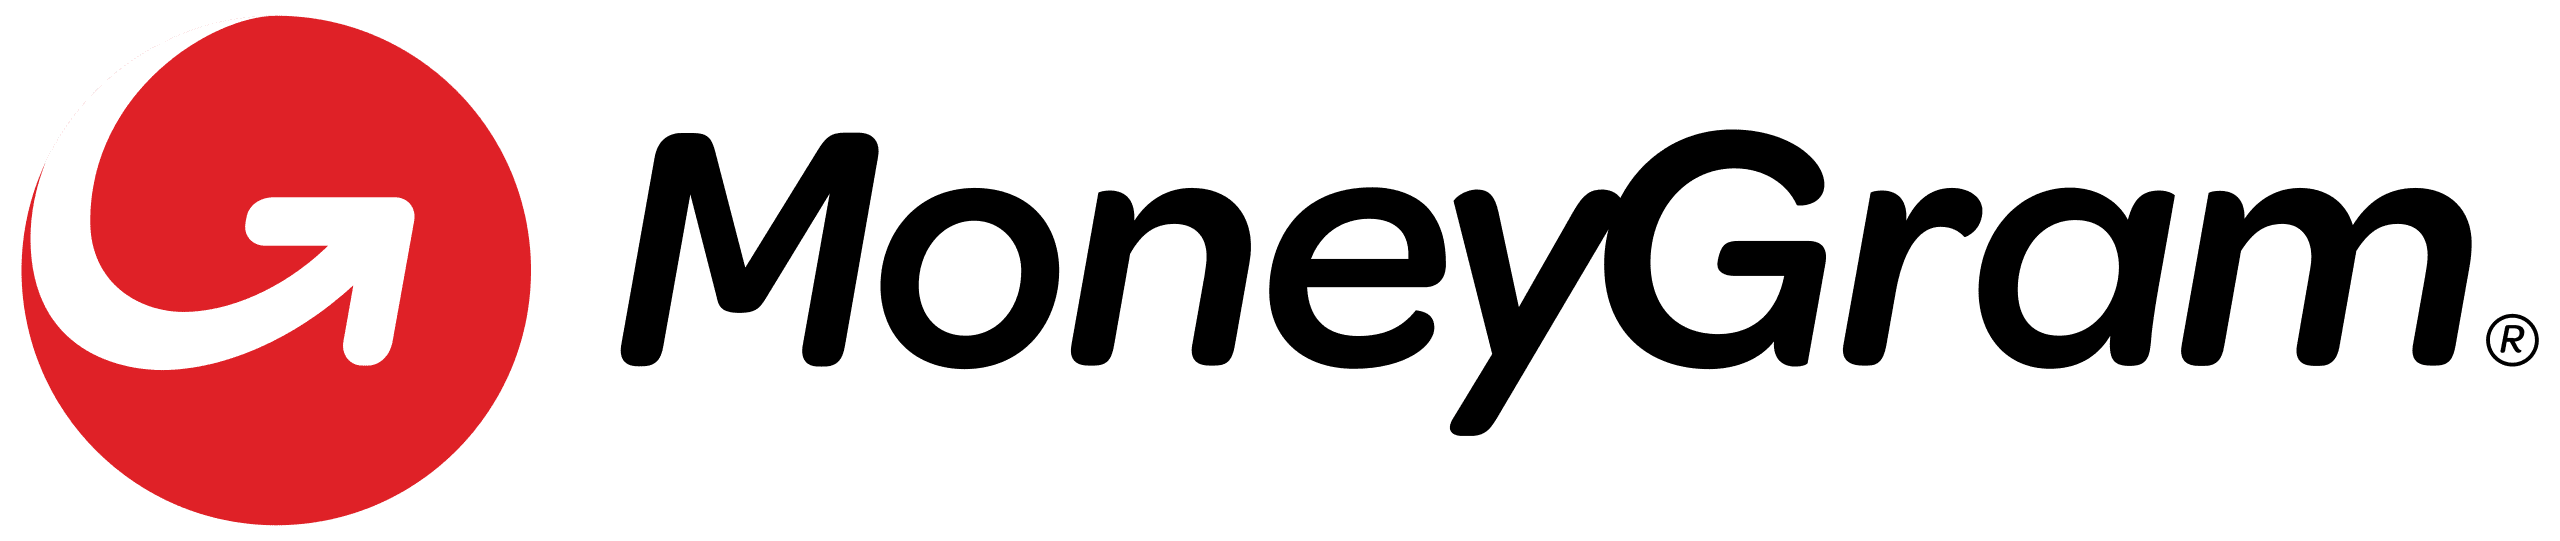 MoneyGram_Logo.svg